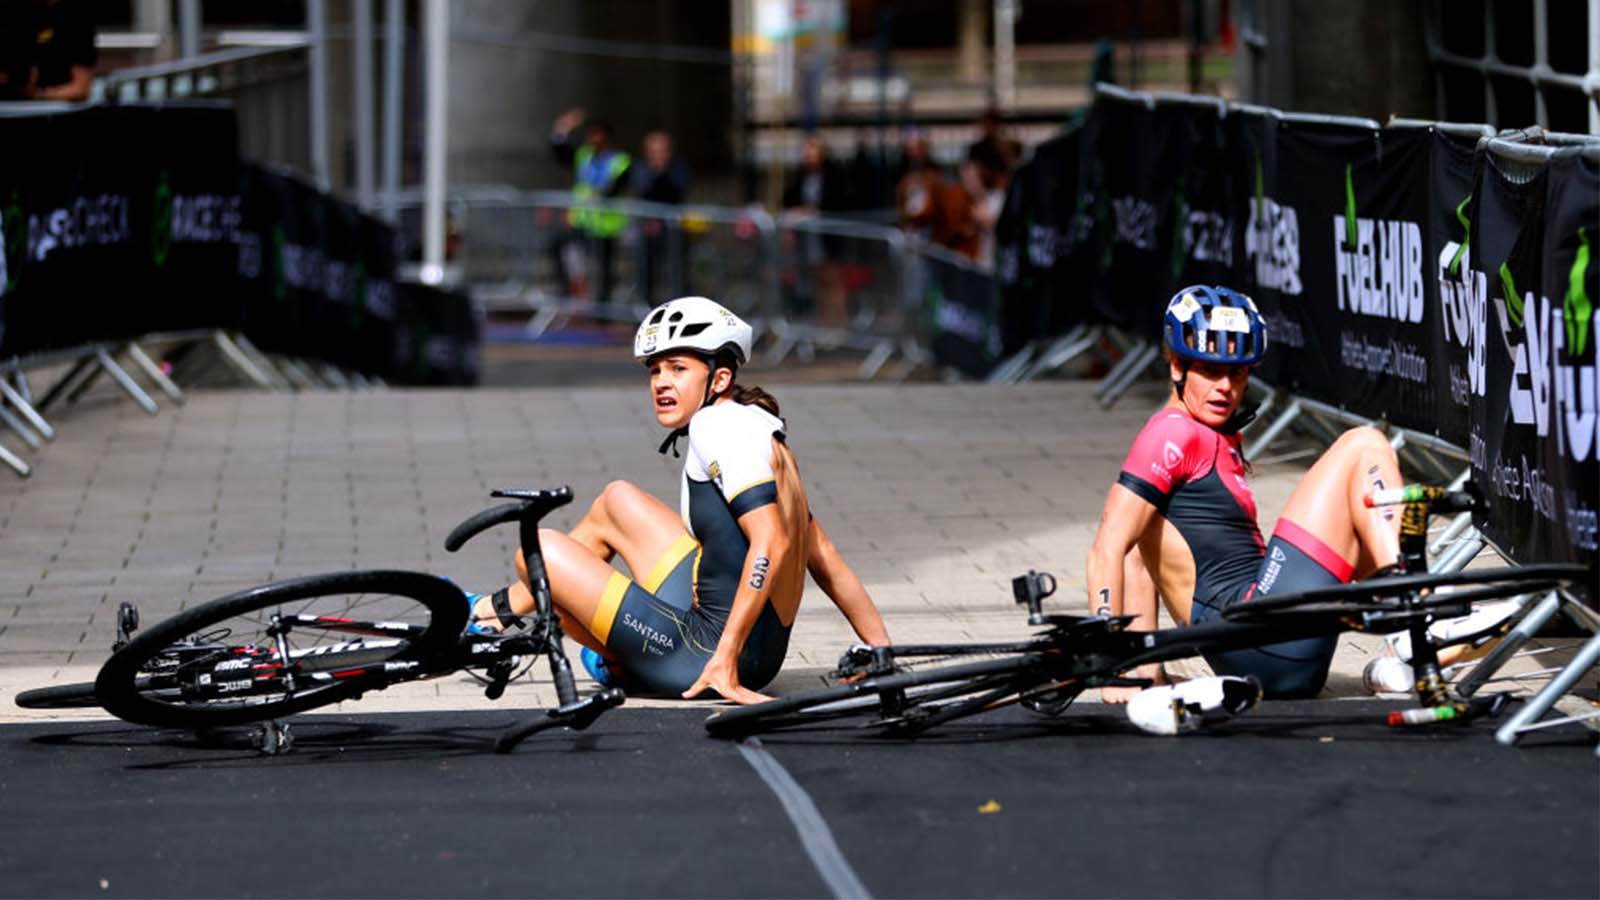 Triathlon athlete Alice Betto crashes bike after teammate Nicole van der Kaay pushes her into barrier.